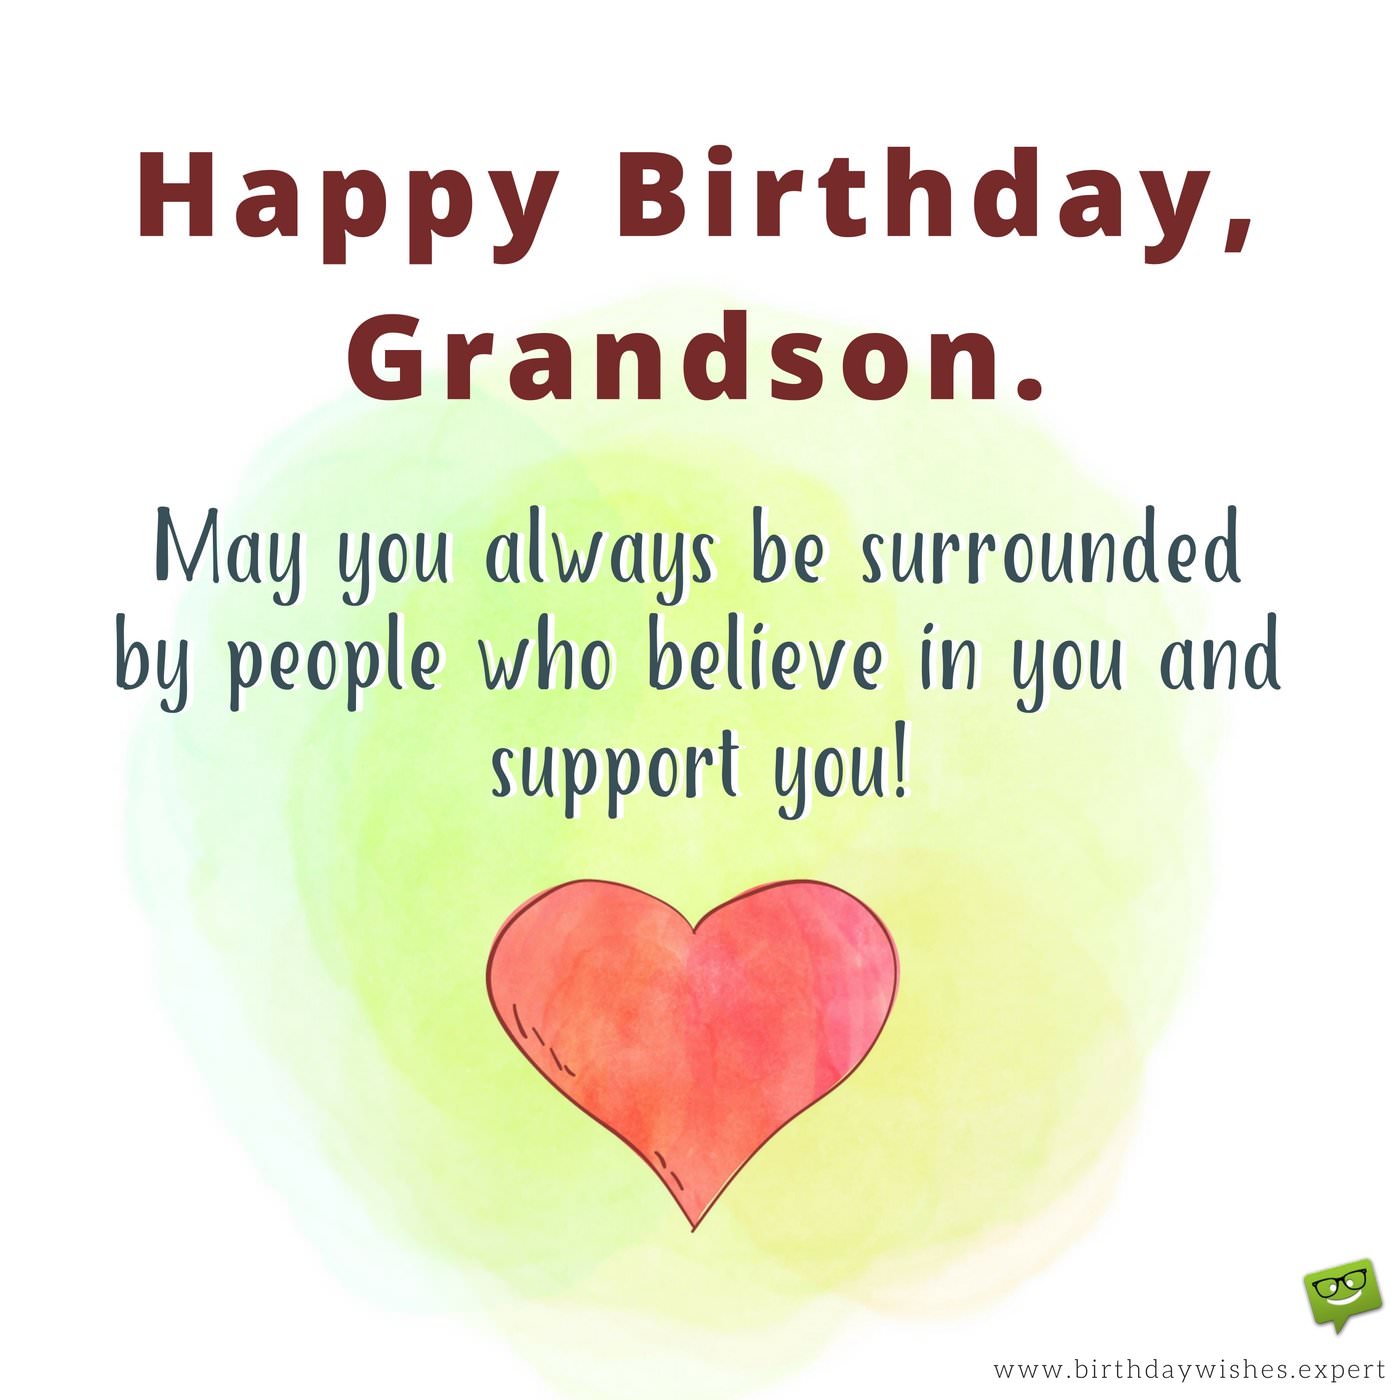 Grandson Have A Very Happy Birthday........Birthday Greetings Card